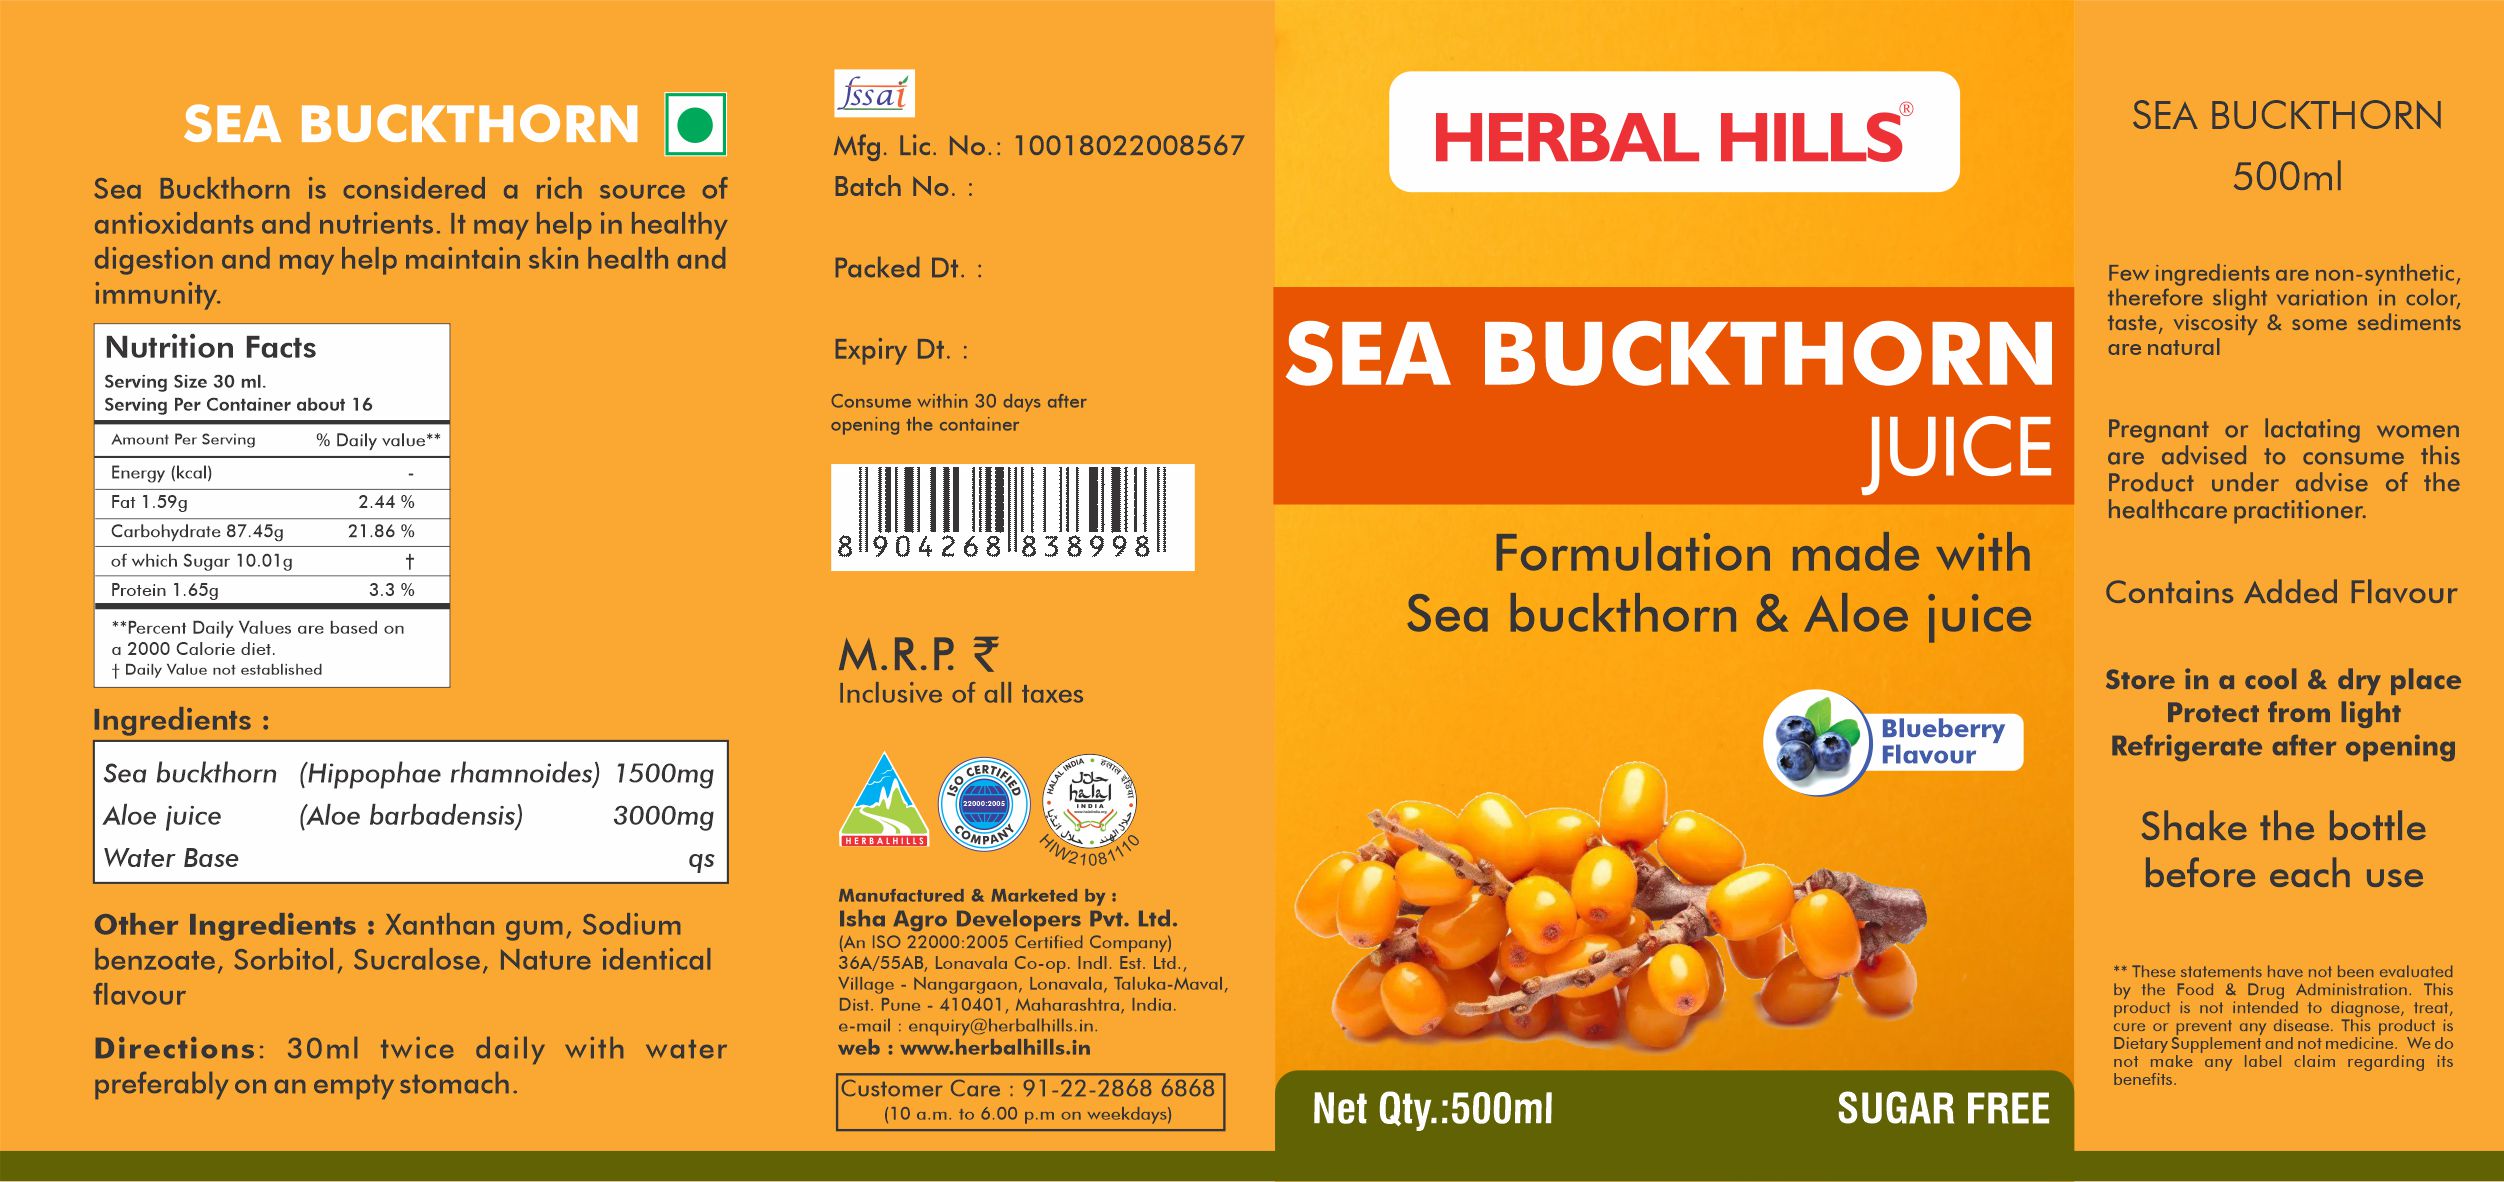 Herbal Hills Sea Buckthorn